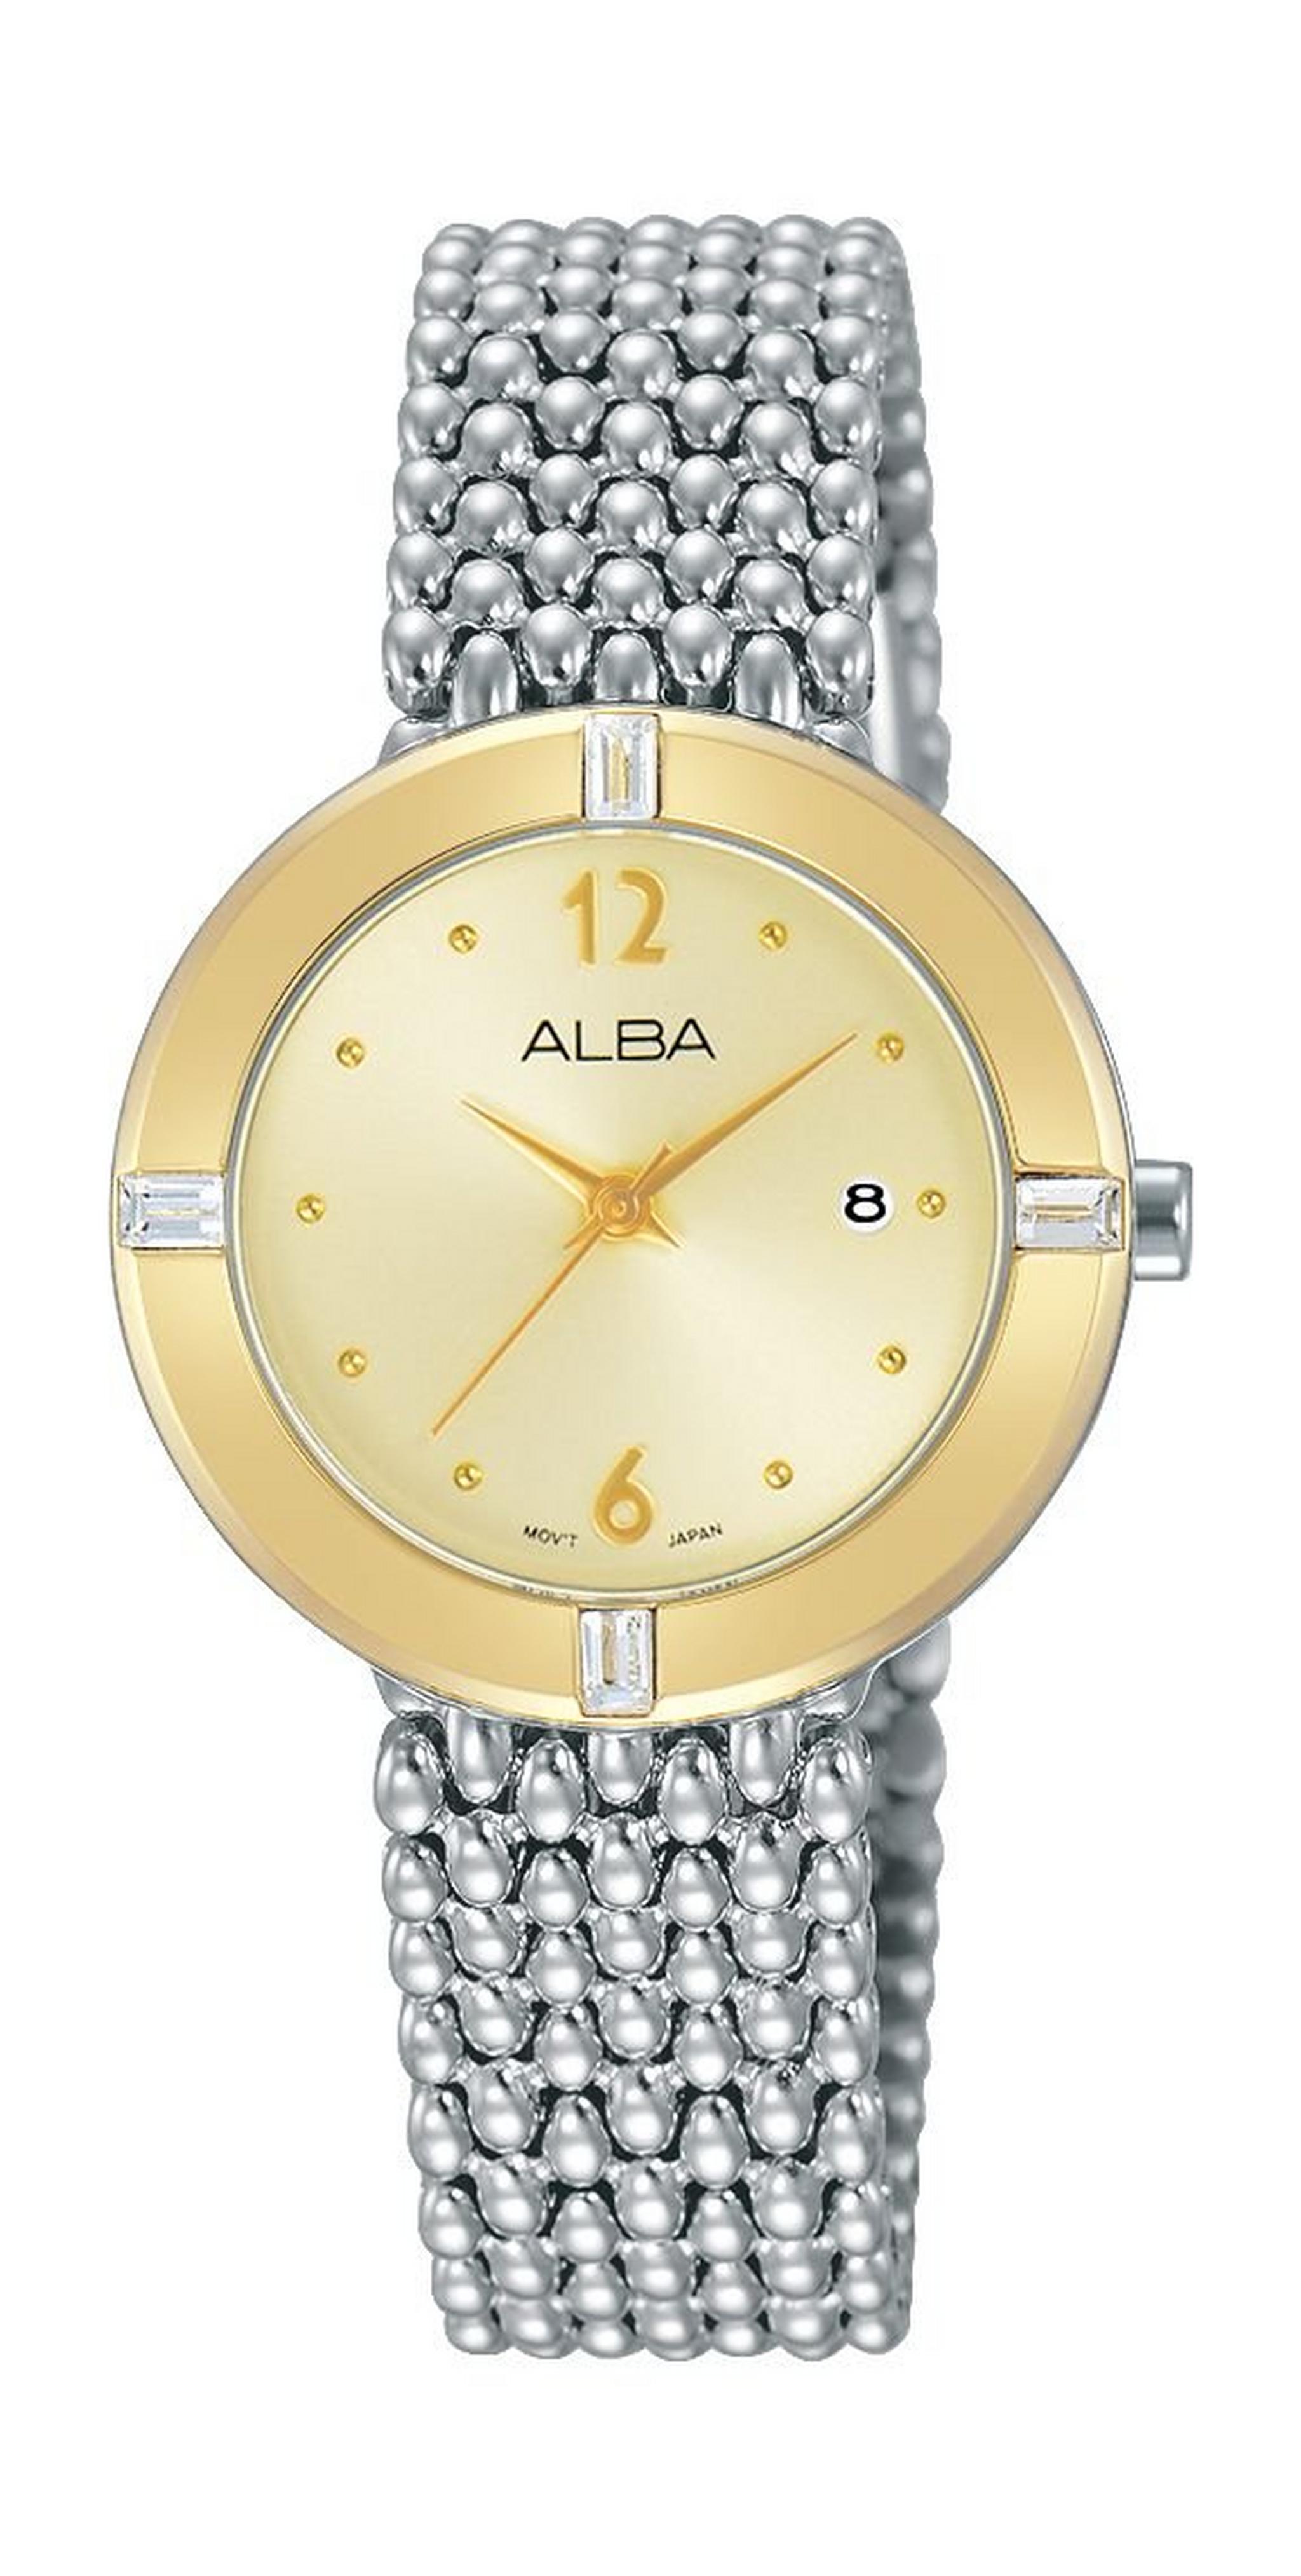 Alba AH7K46X1 Ladies Fashion Analog Watch - Metal Strap – Silver